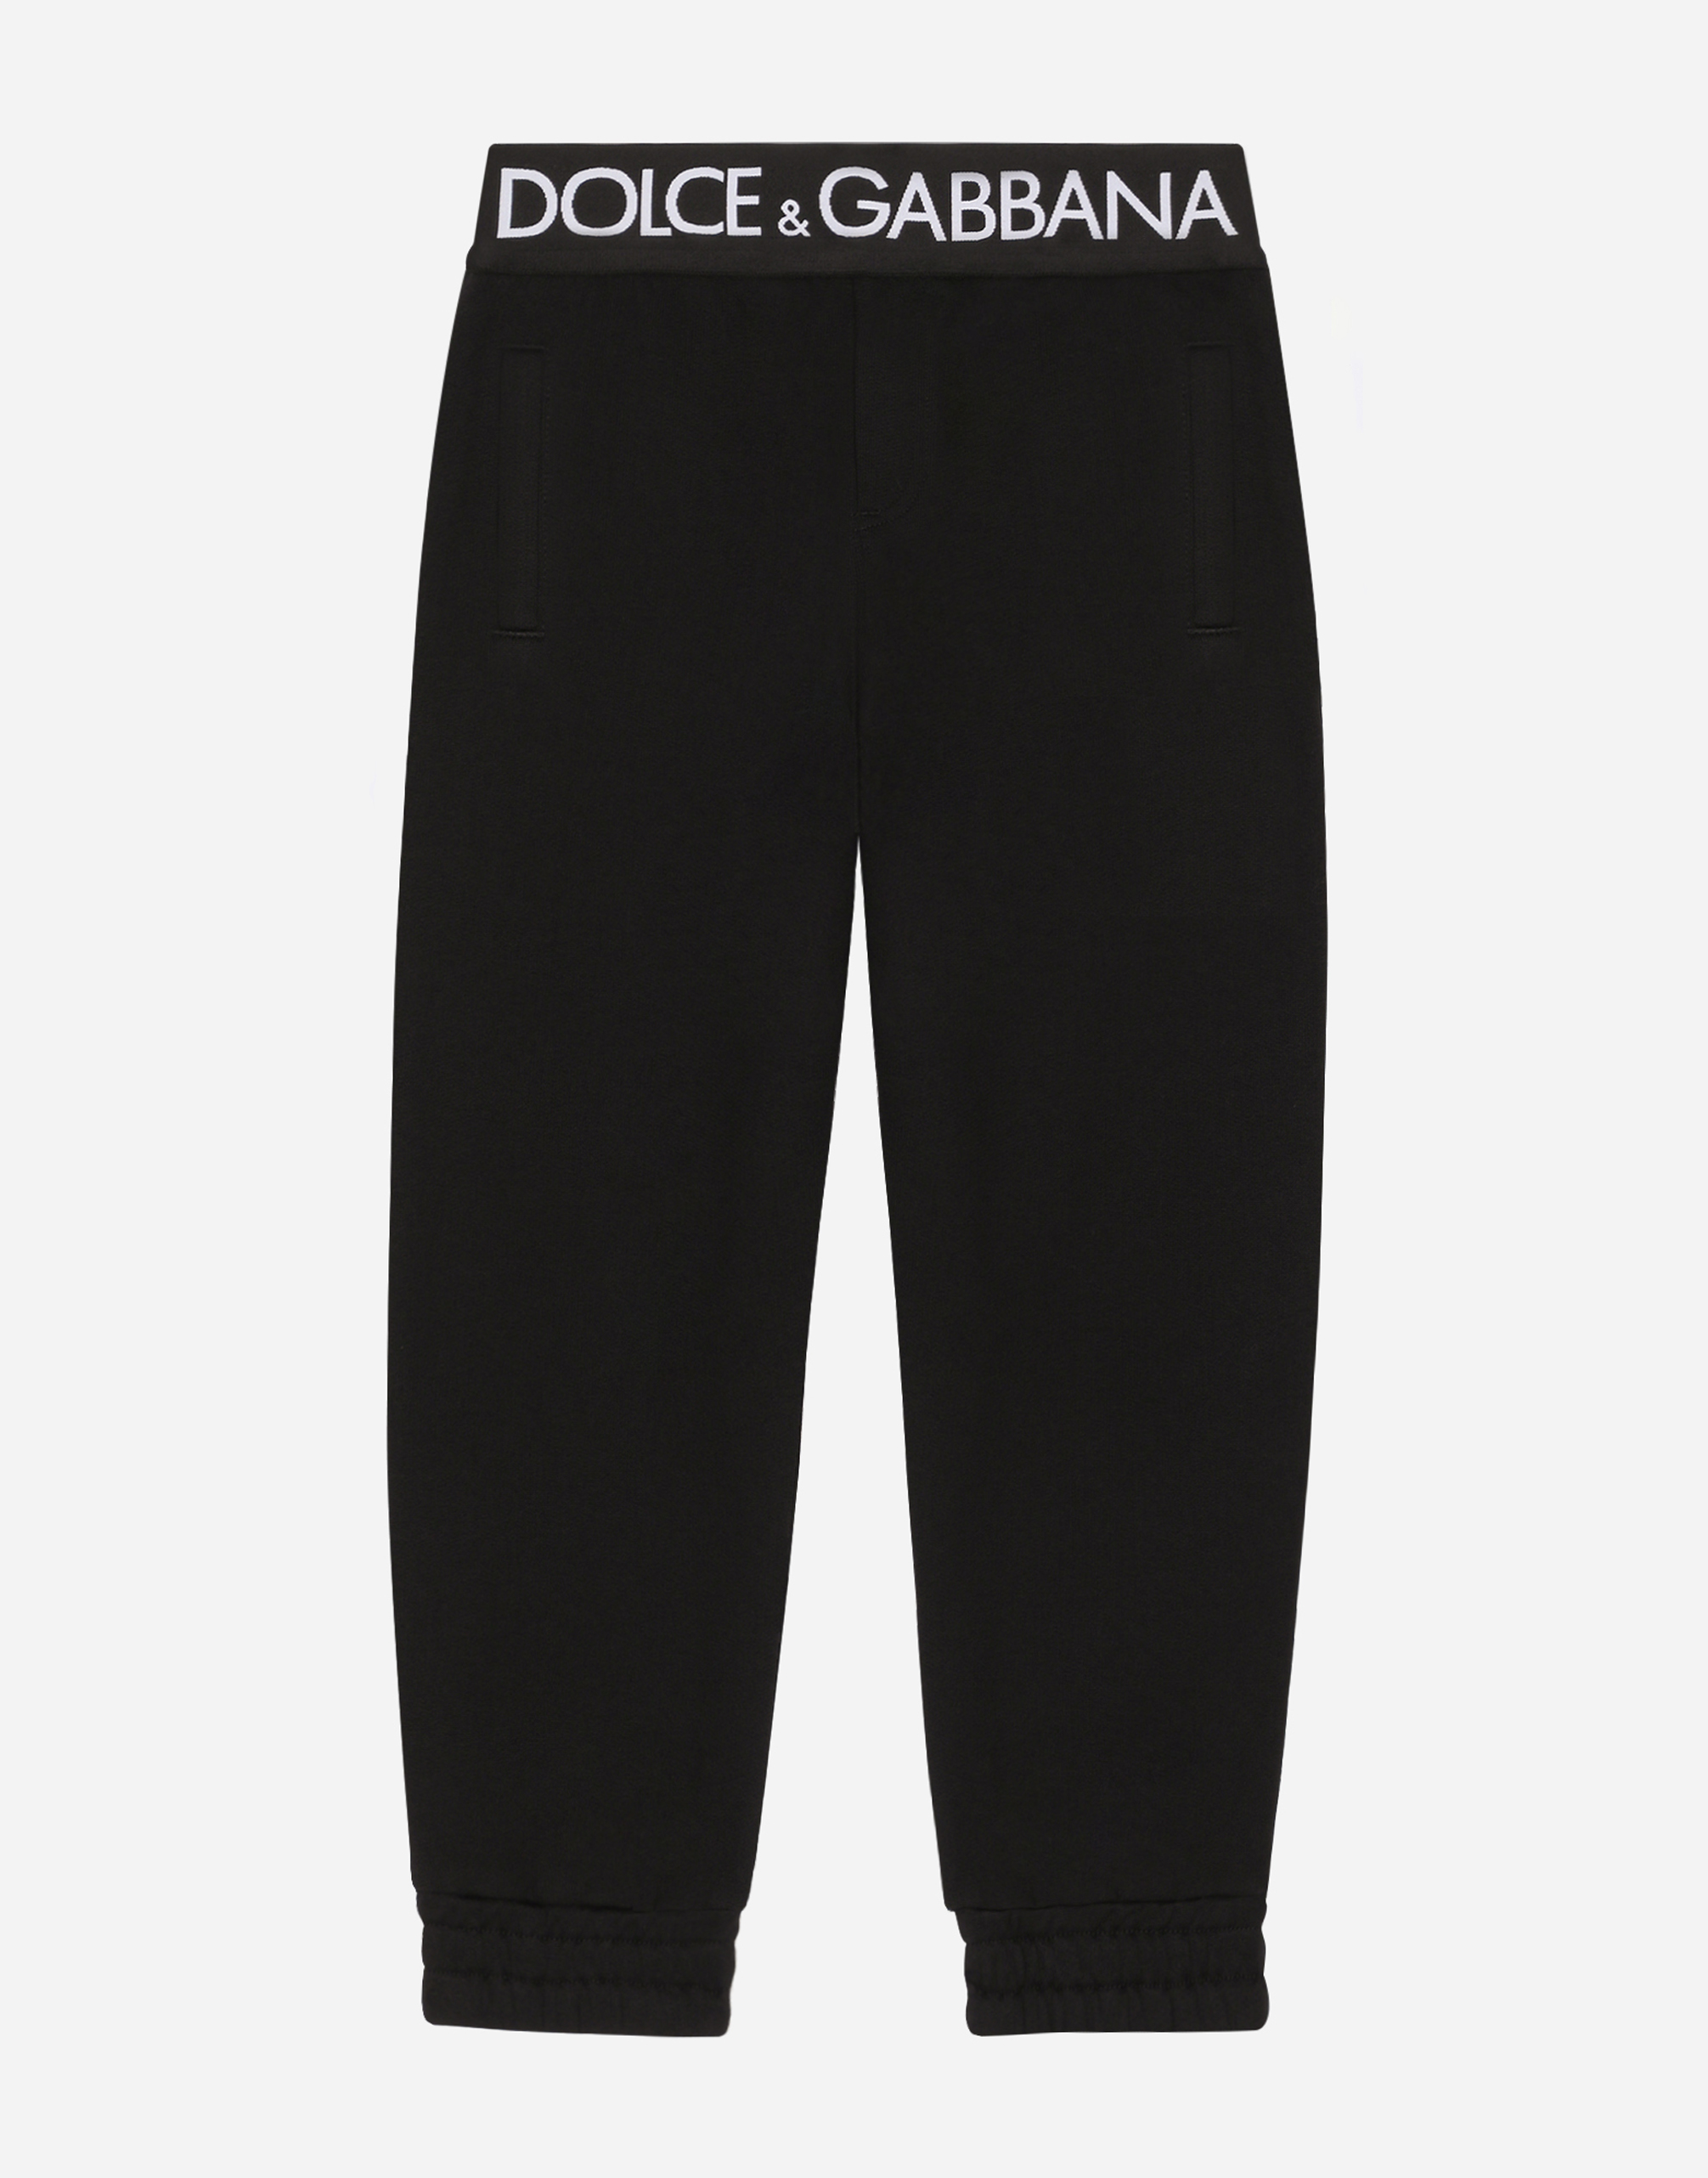 Dolce & Gabbana Kids' Jersey Jogging Pants With Branded Elastic In Black